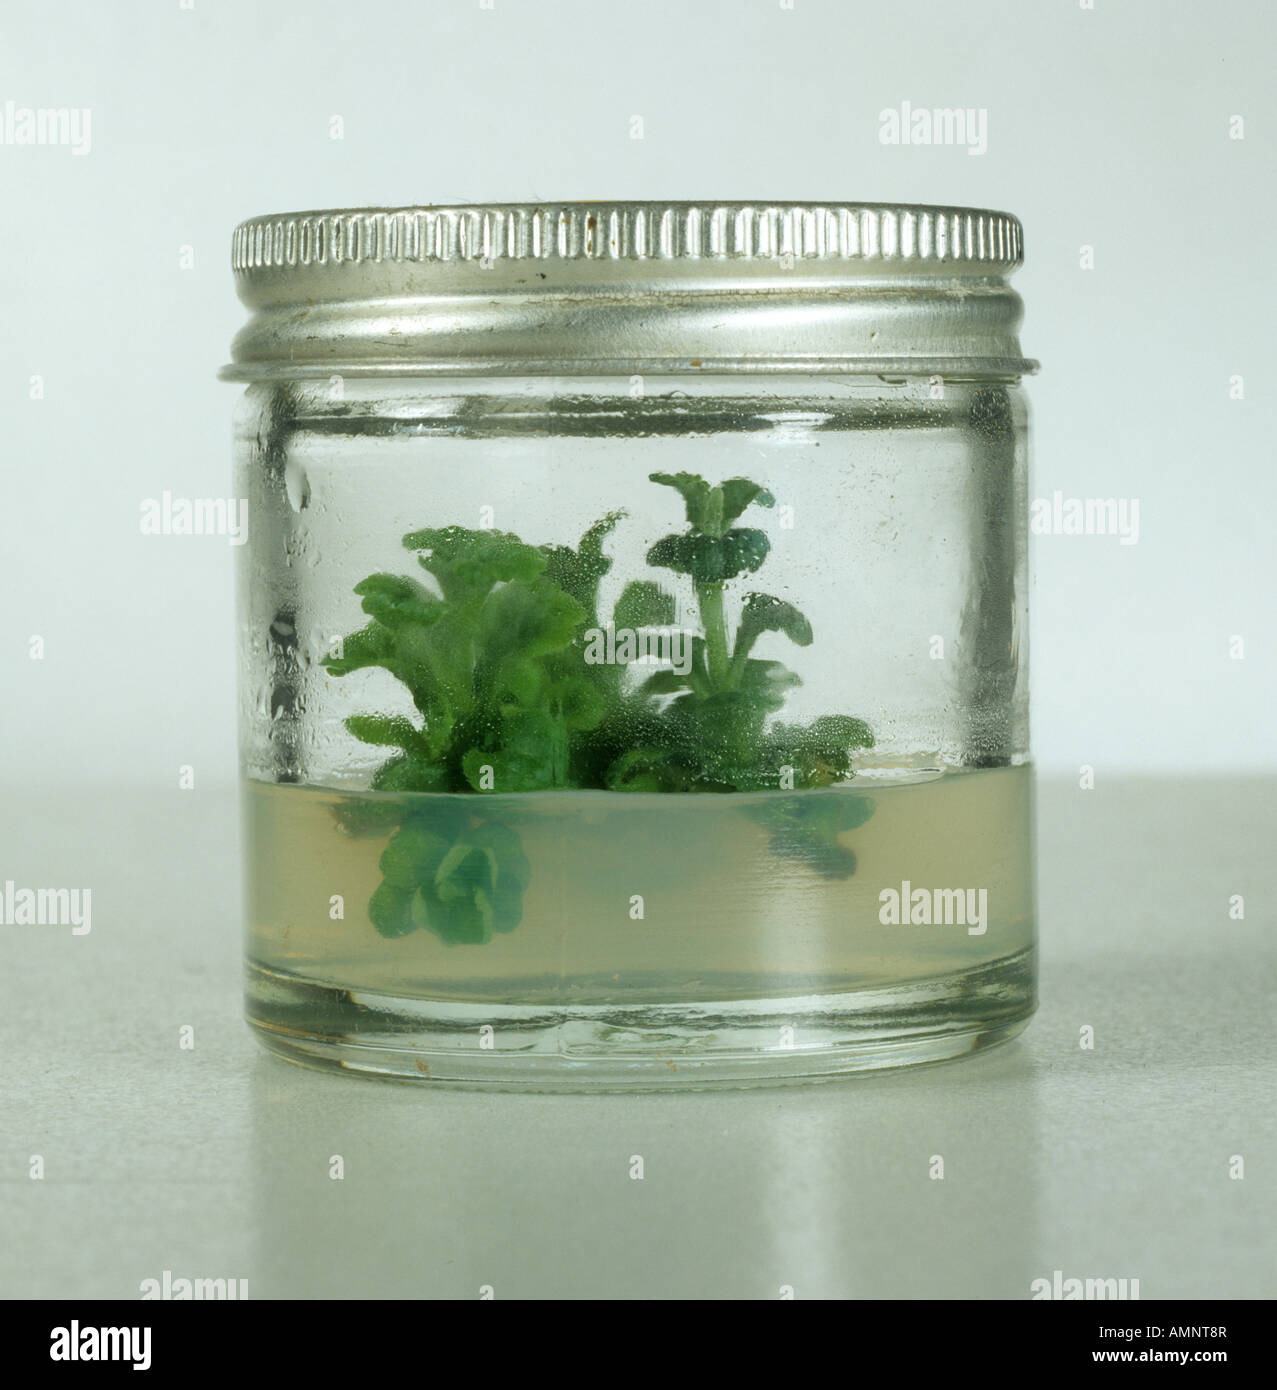 Micropropagated Chrysanthemum plants in a glass jar growing in agar medium Stock Photo